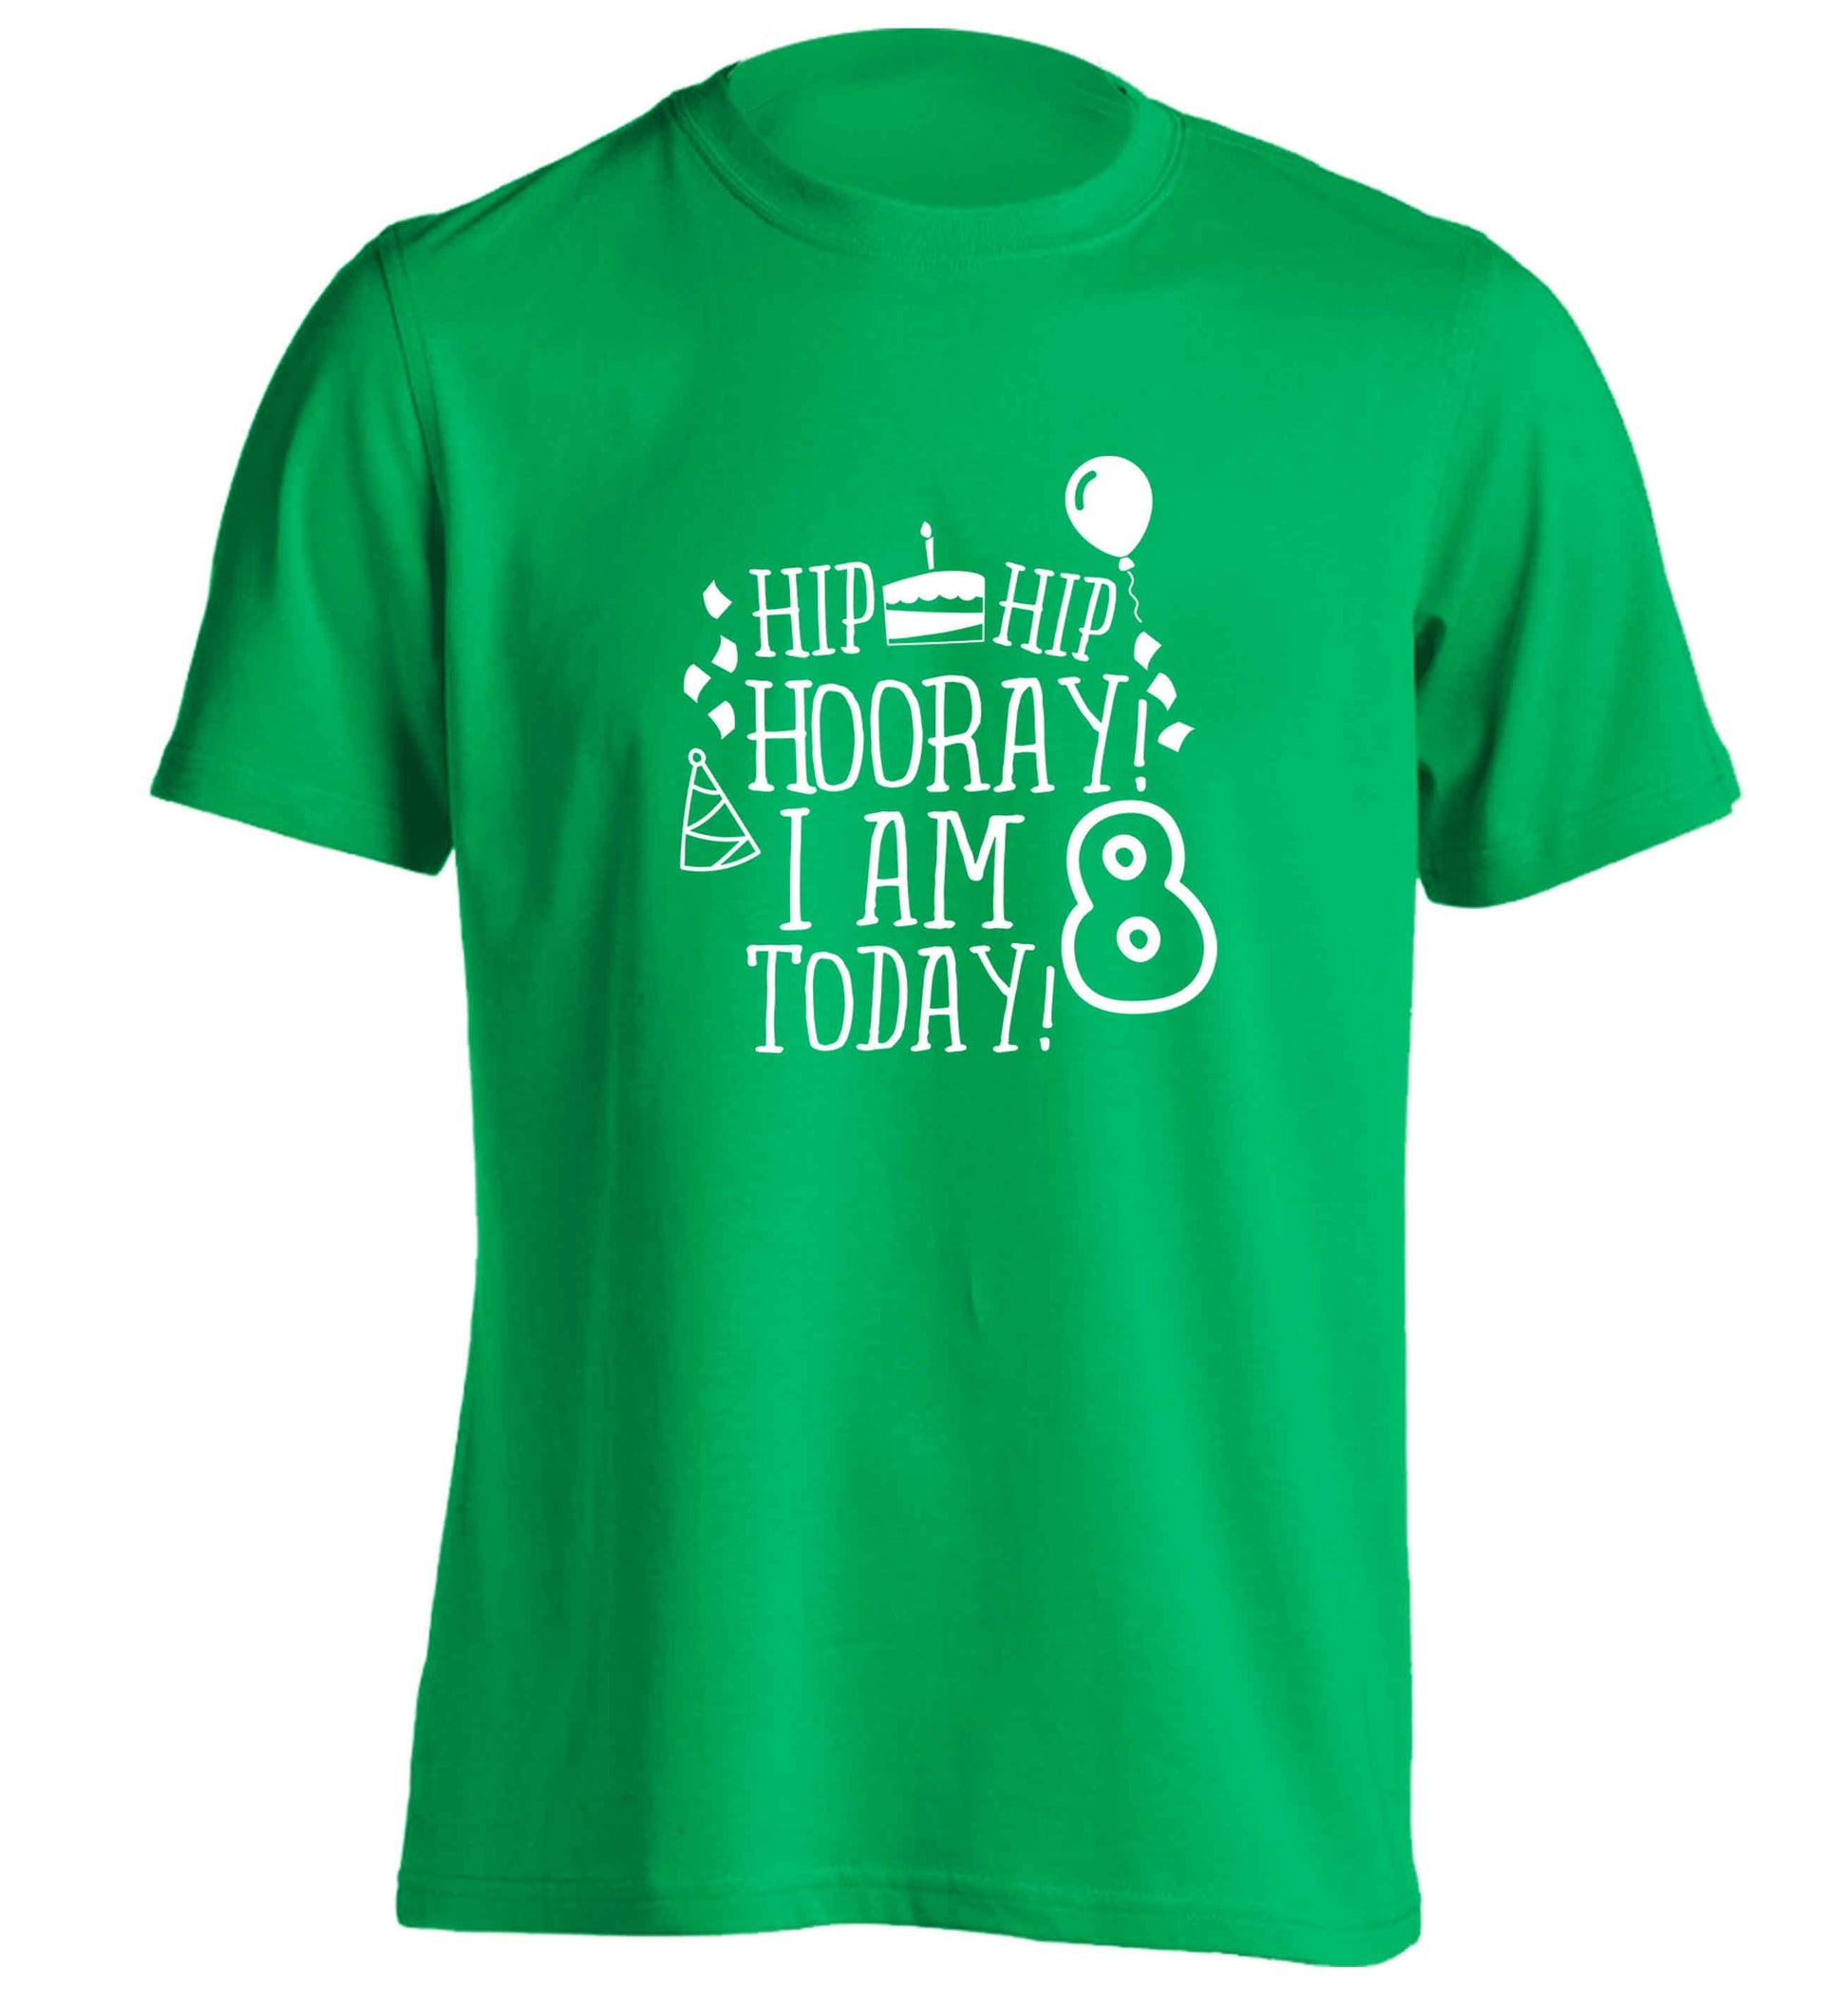 Hip hip hooray I am 8 today! adults unisex green Tshirt 2XL